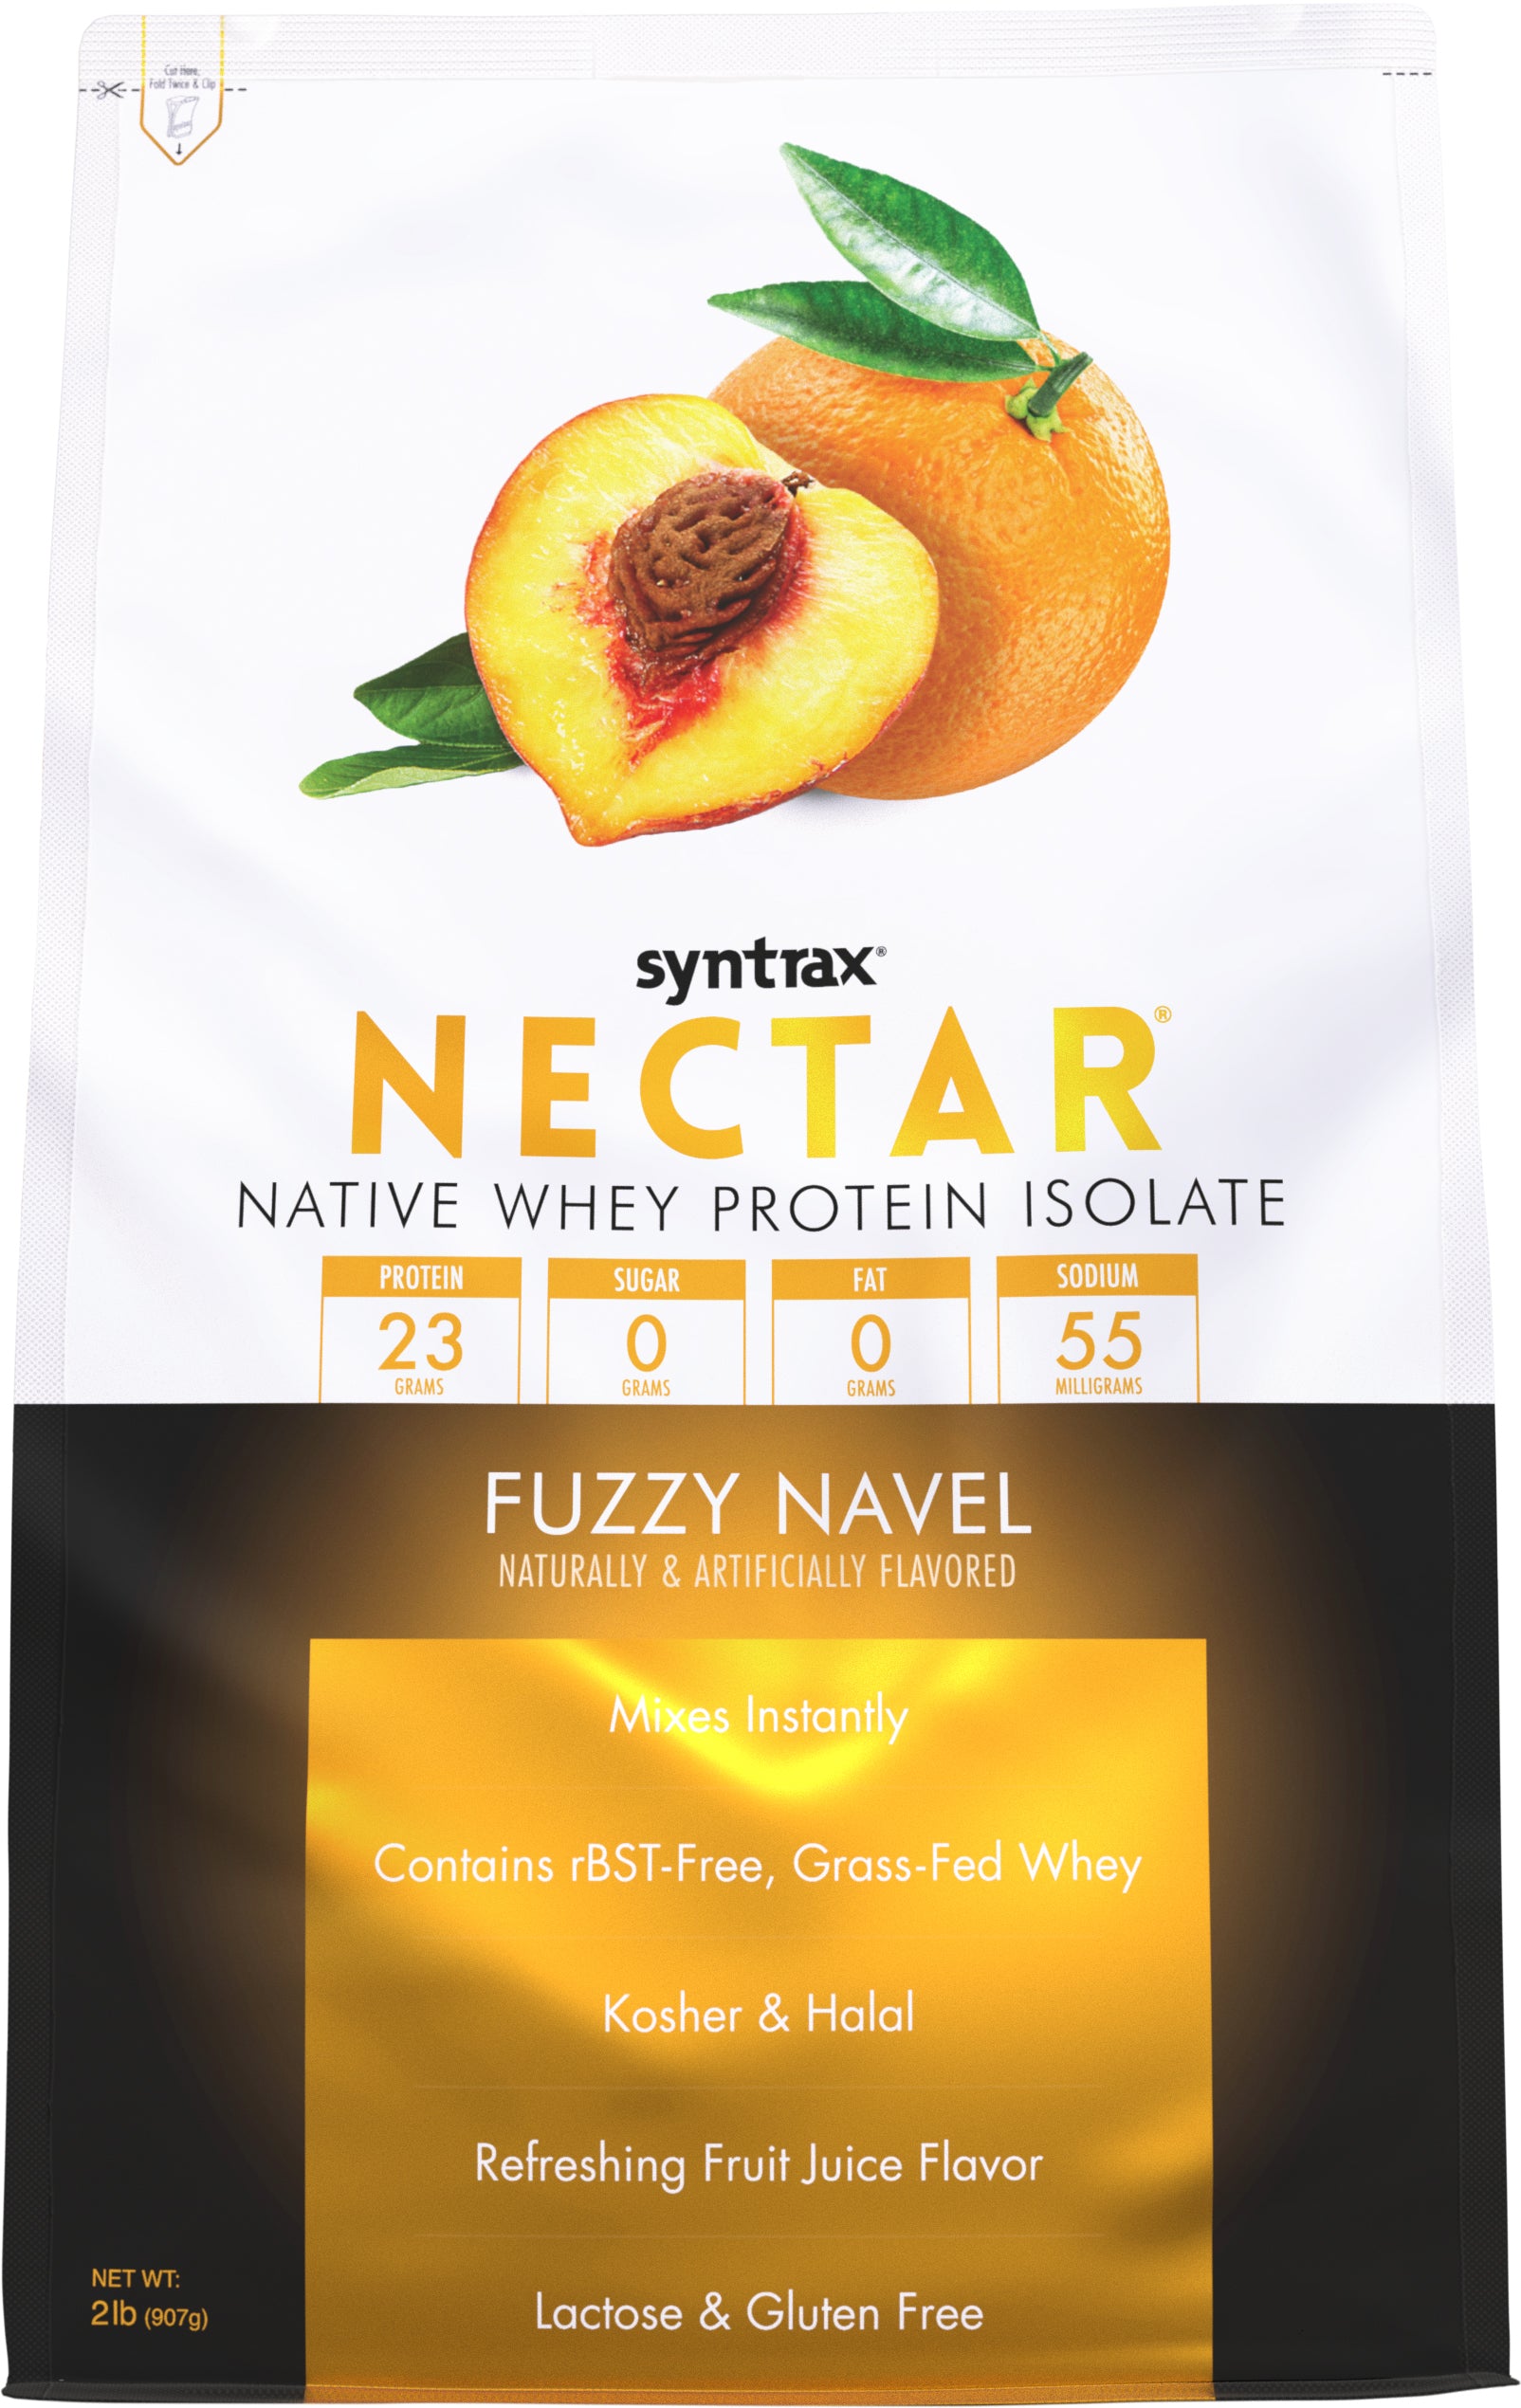 SYNTRAX Nectar (2lb BAG) - Fuzzy Navel